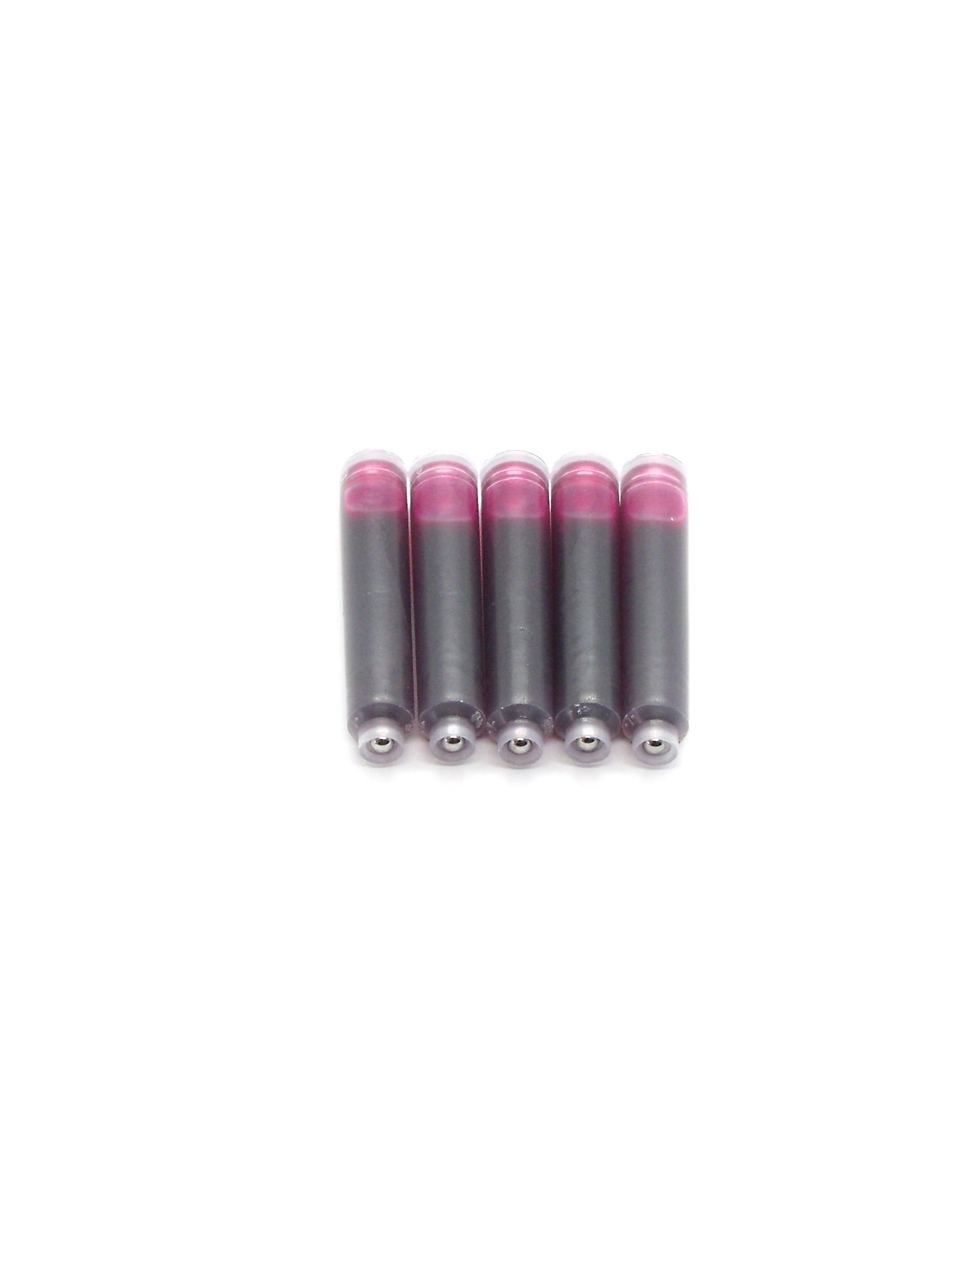 PenConverter Ink Cartridges For Standard International Fountain Pens (Pink)